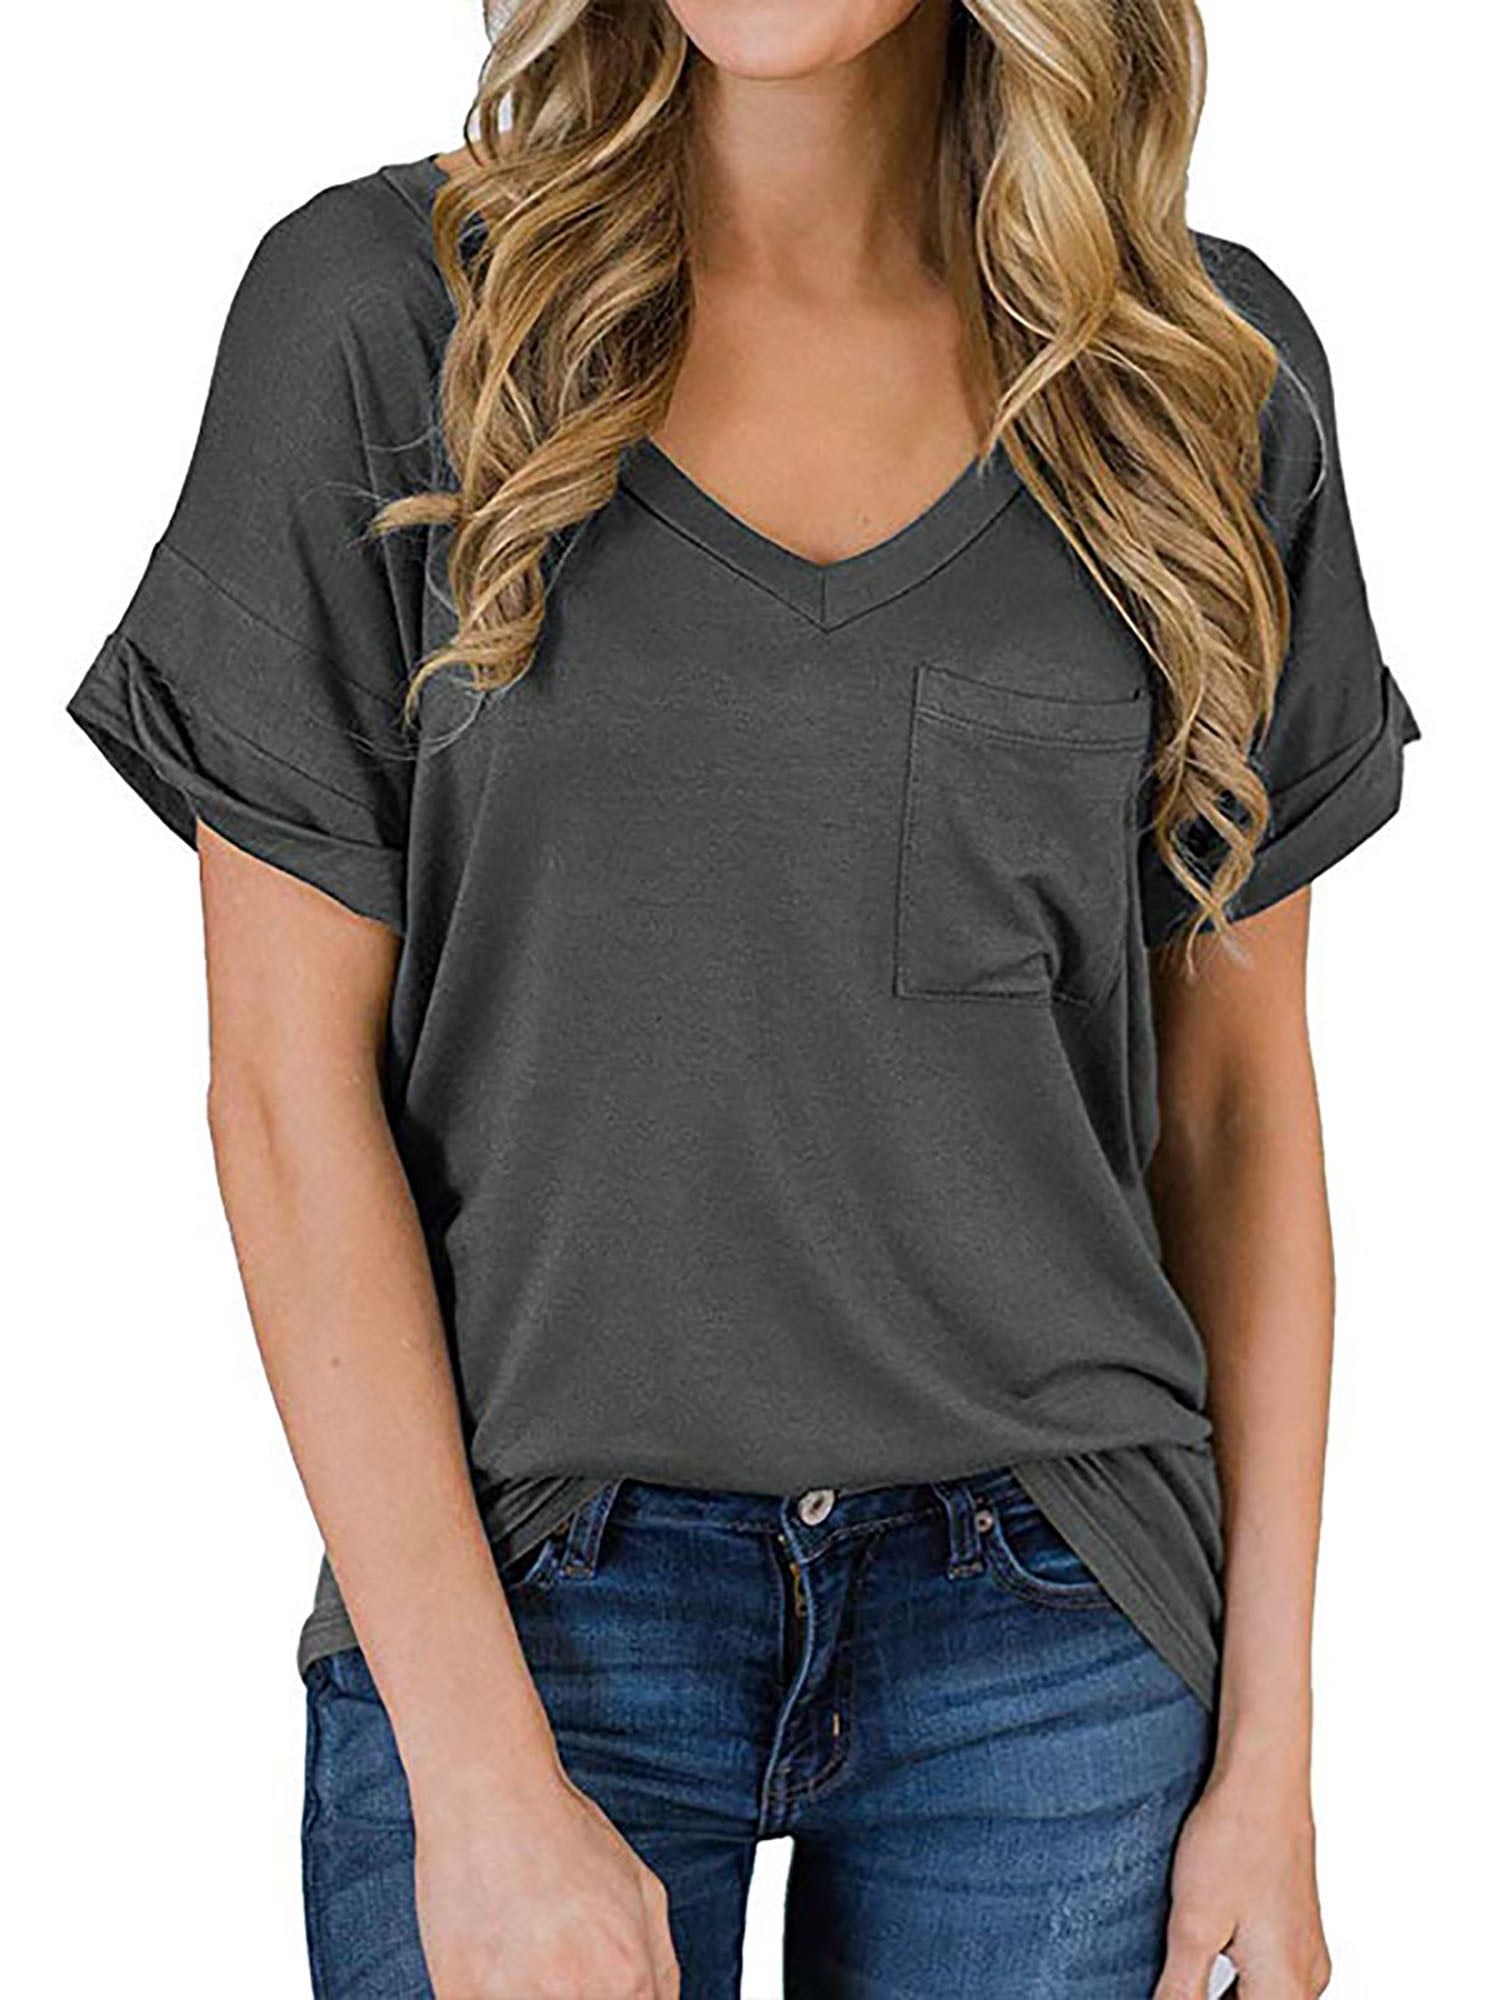 Women Summer Short Sleeve solid Color Shirt Blouse T Shirt Casual Tee Tops